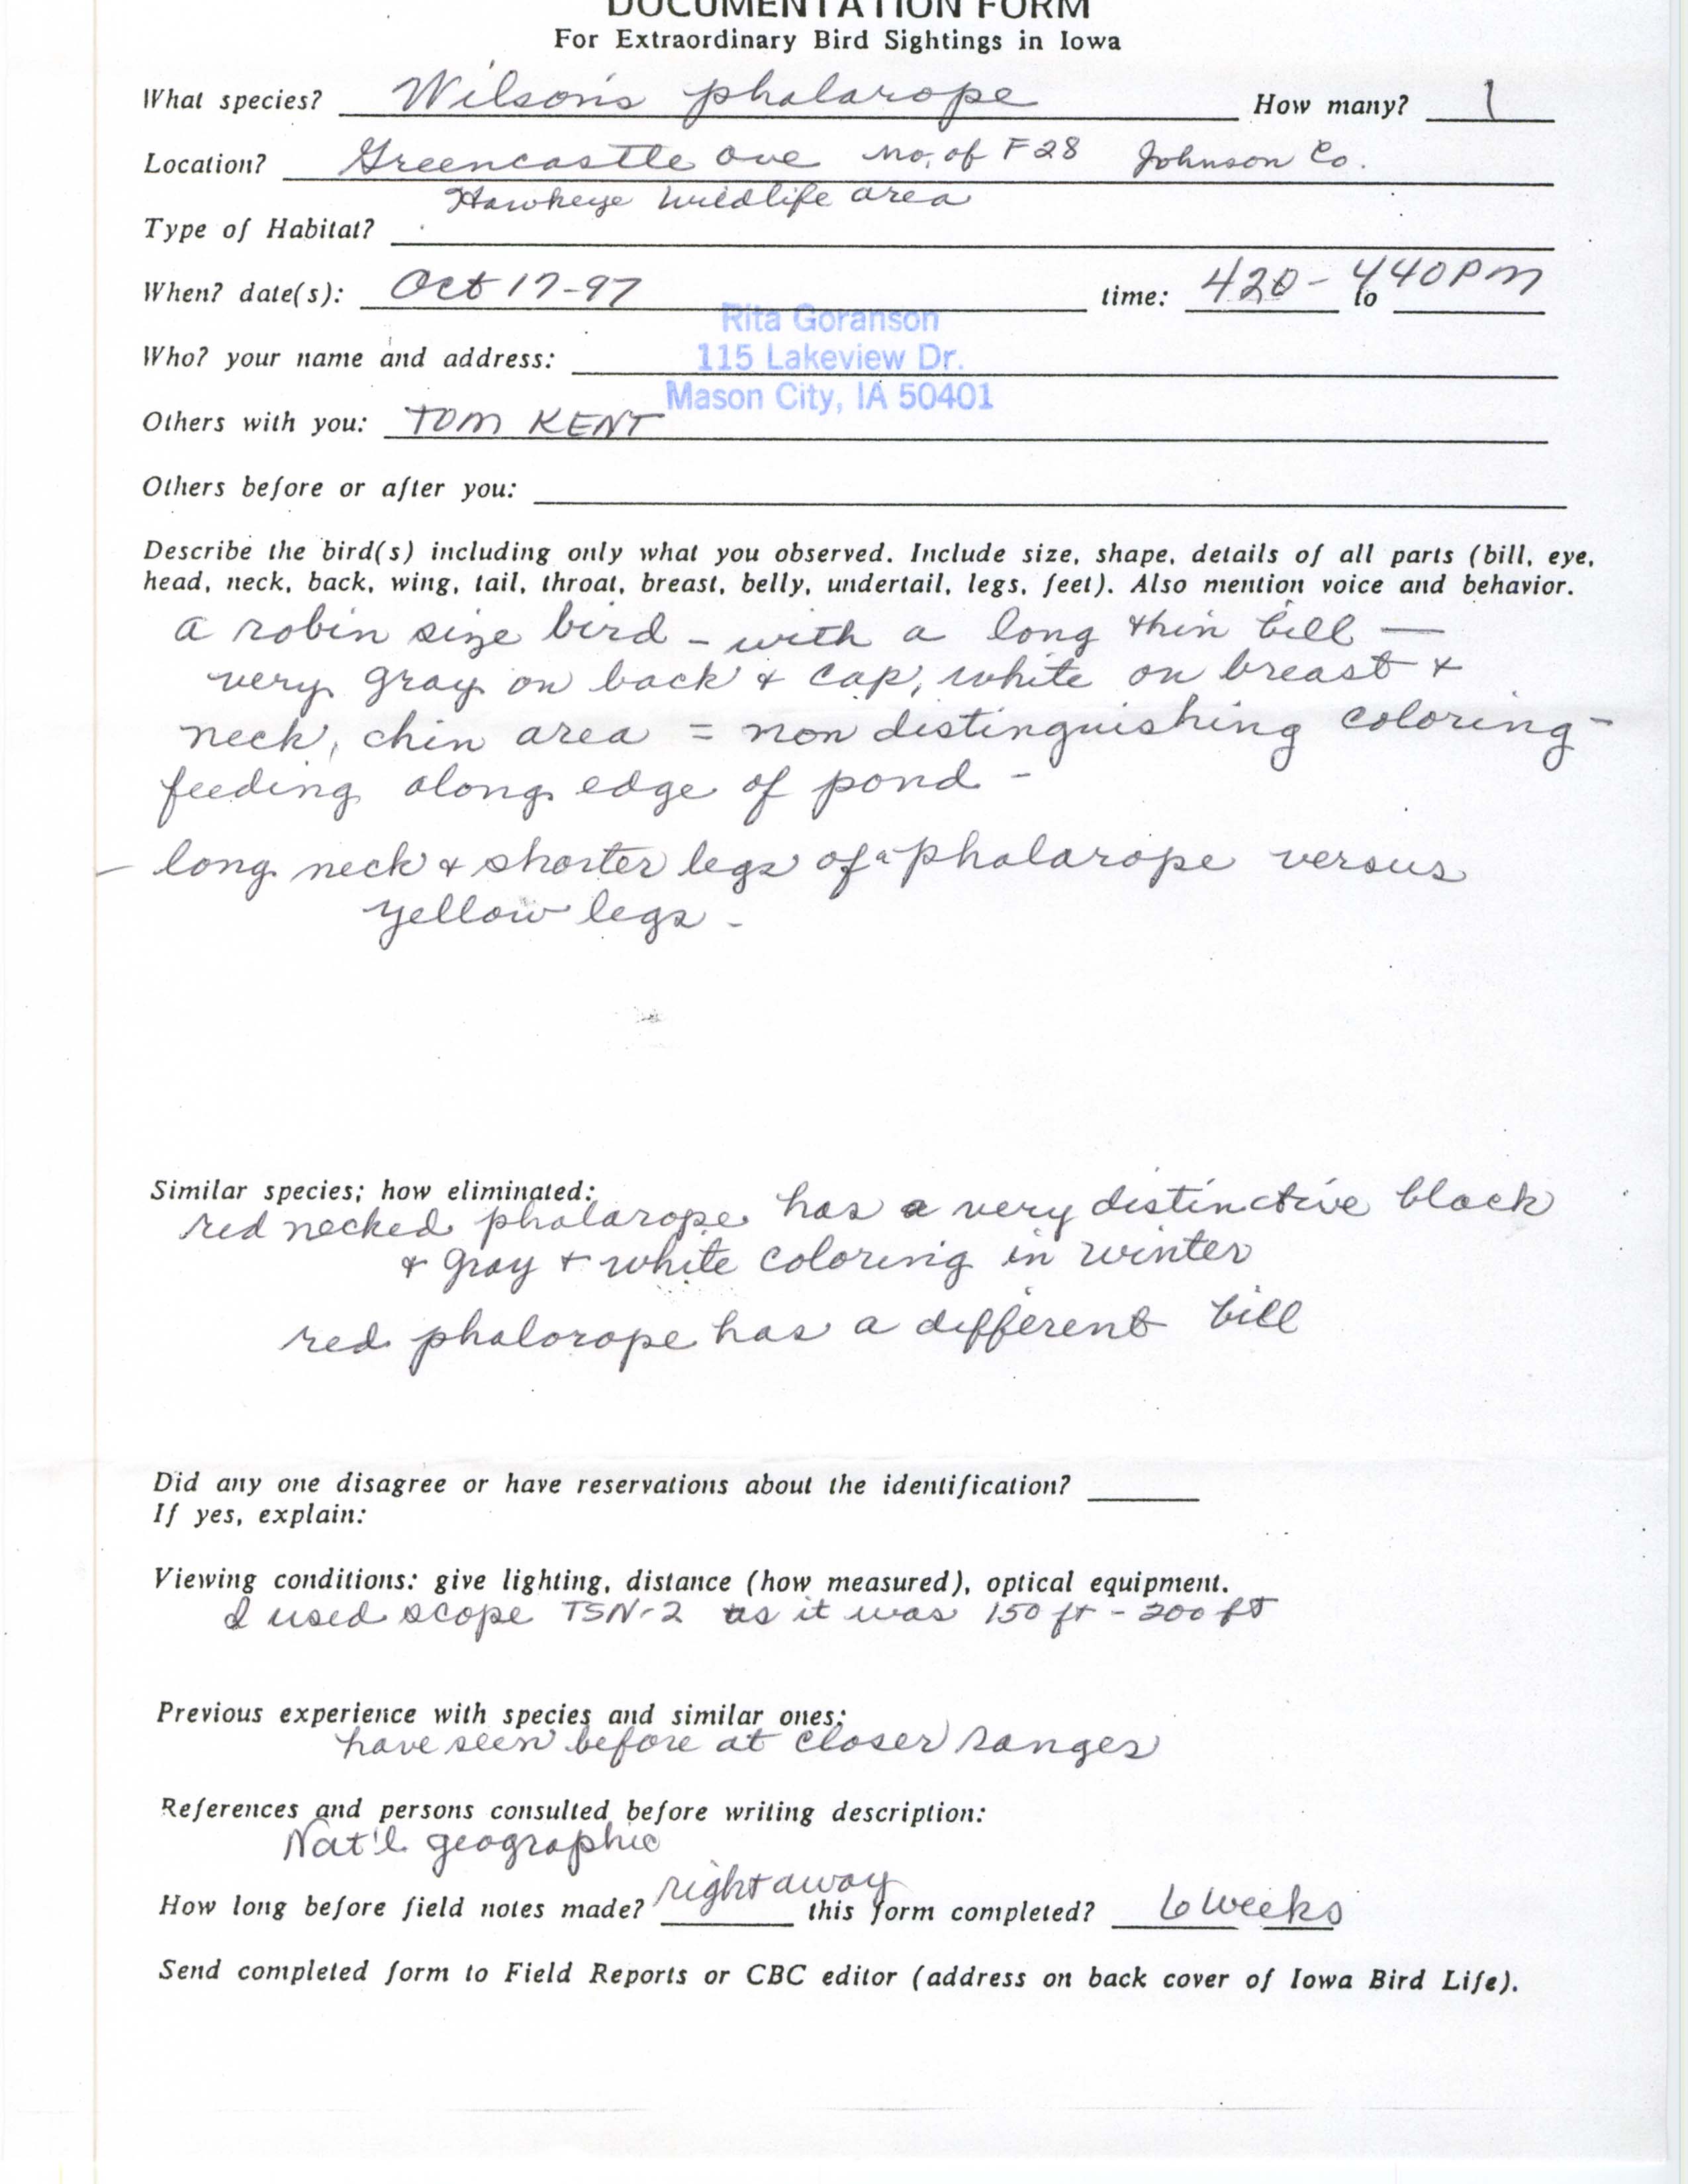 Rare bird documentation form for Wilson's Phalarope at Hawkeye Wildlife Area, 1997